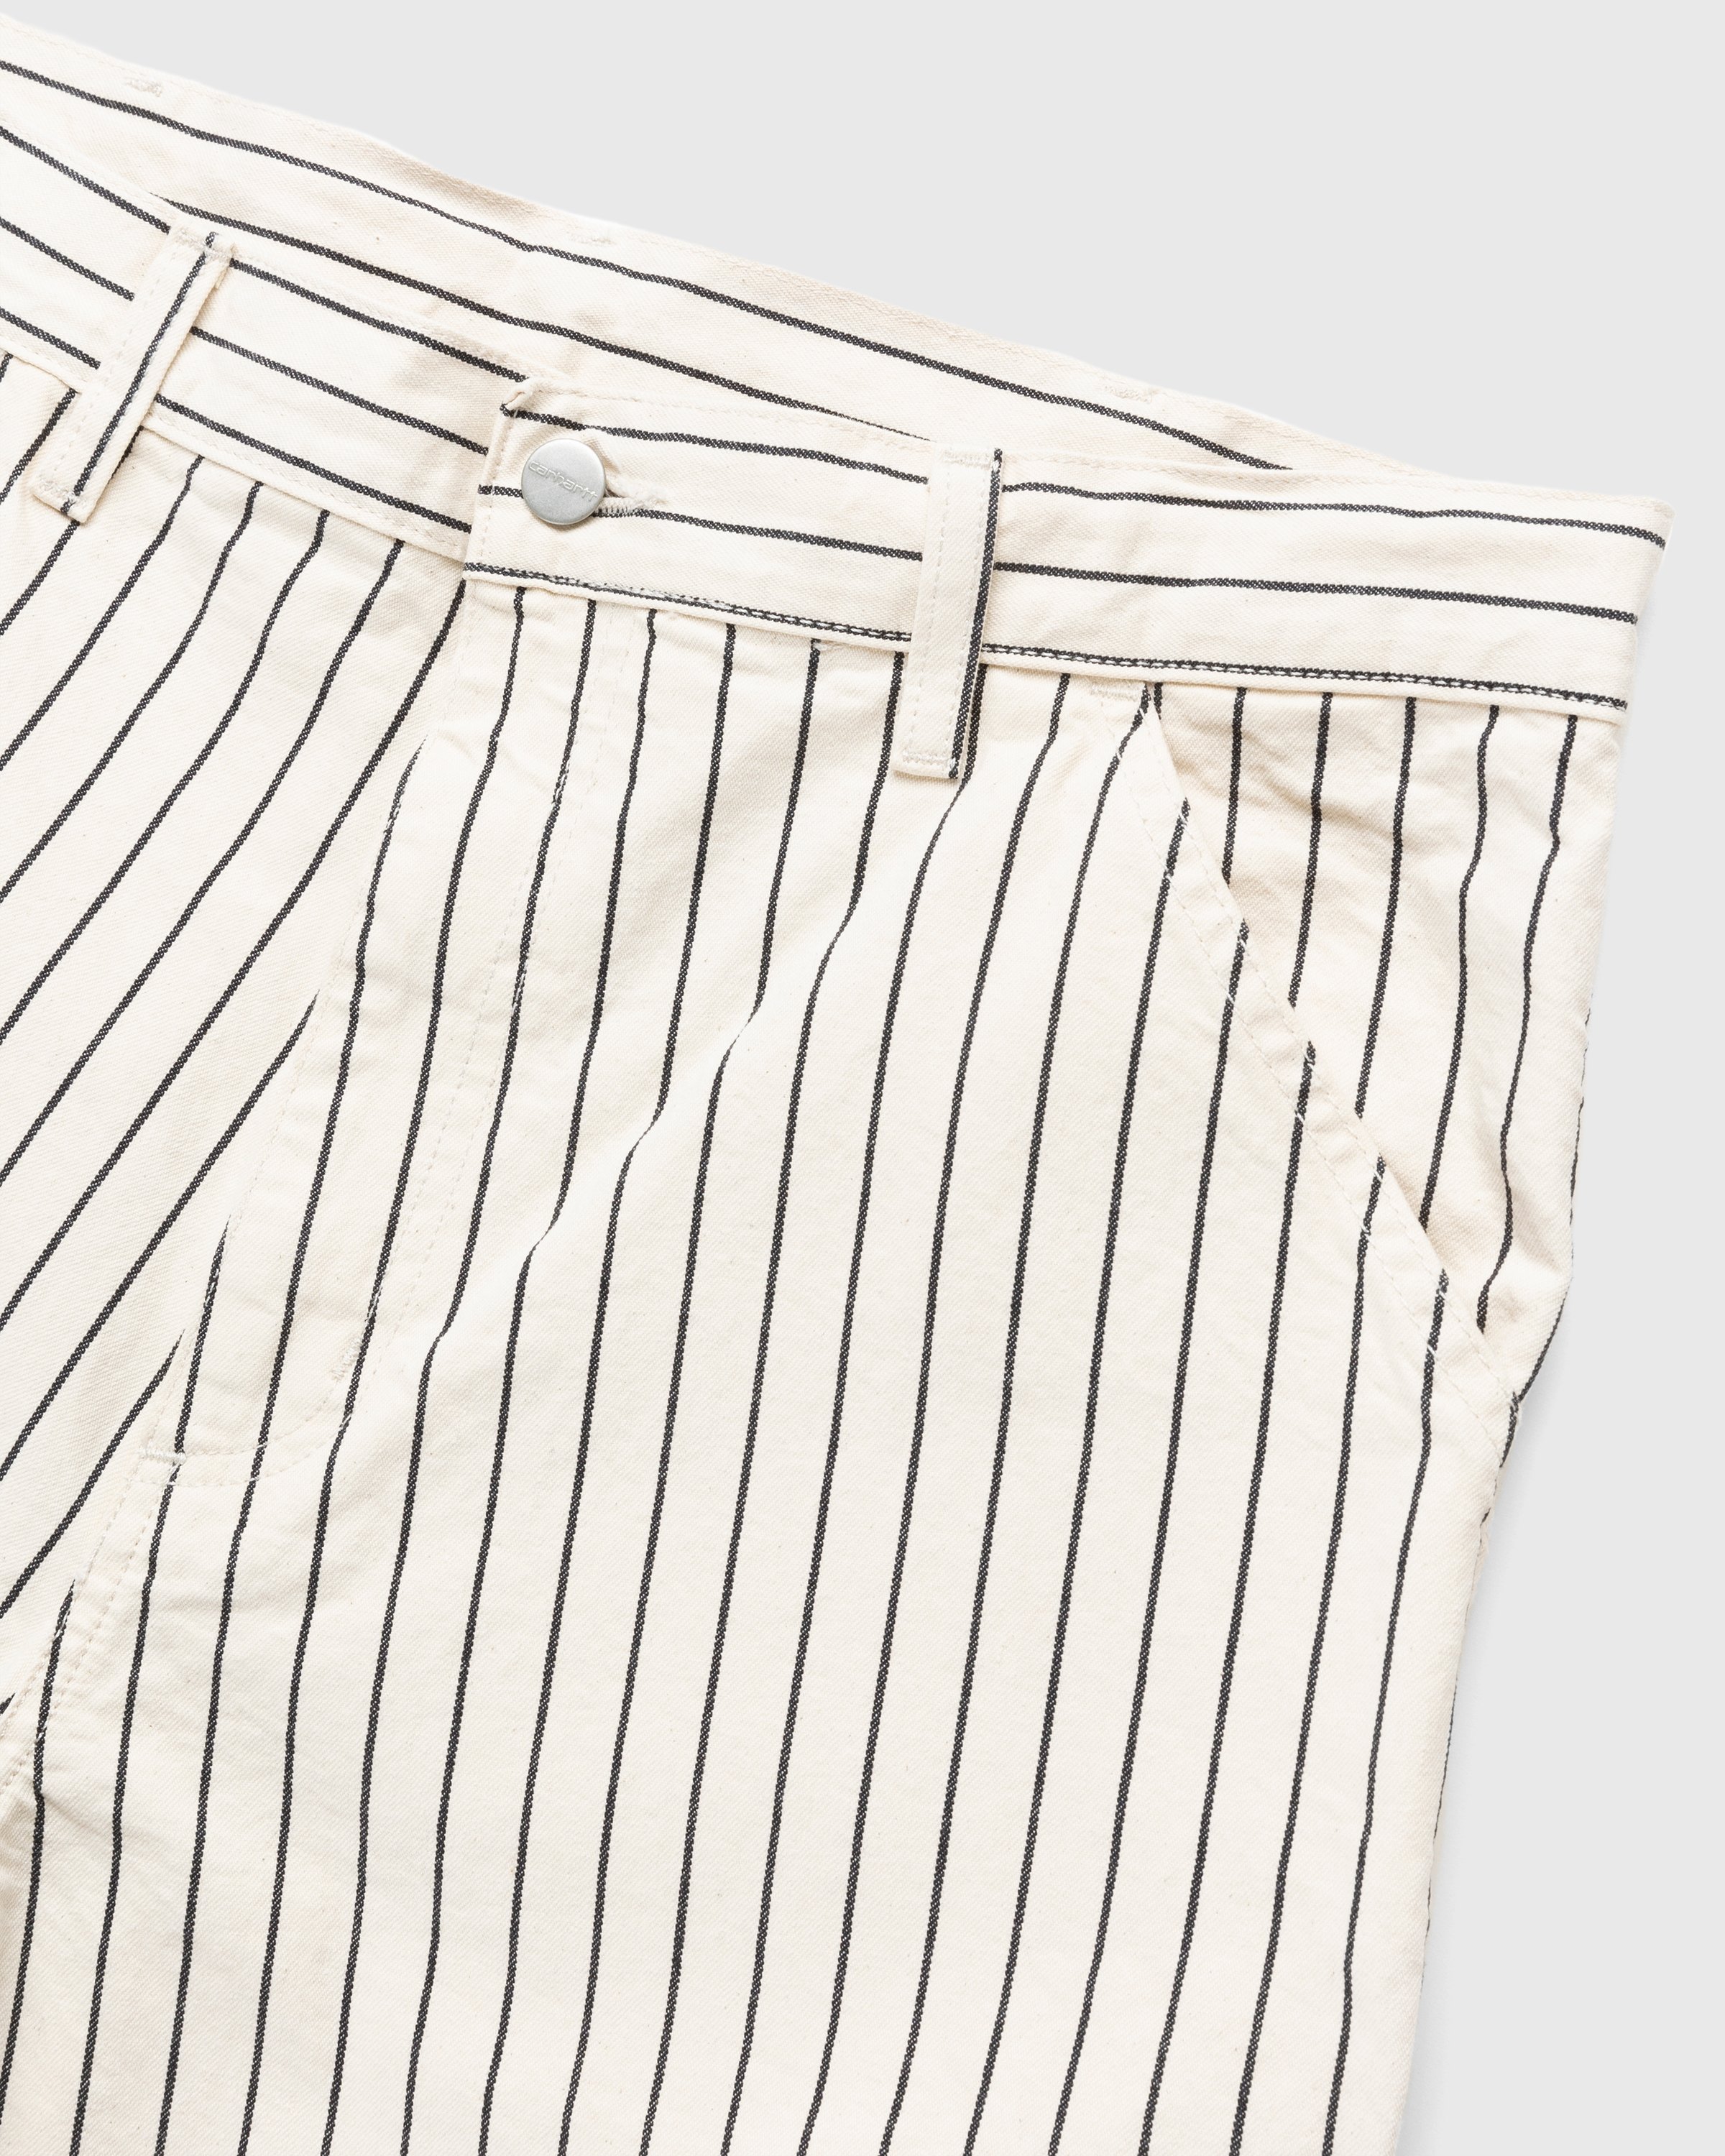 Carhartt WIP - Trade Single Knee Pant Wax/Black Rinsed - Clothing - White - Image 5